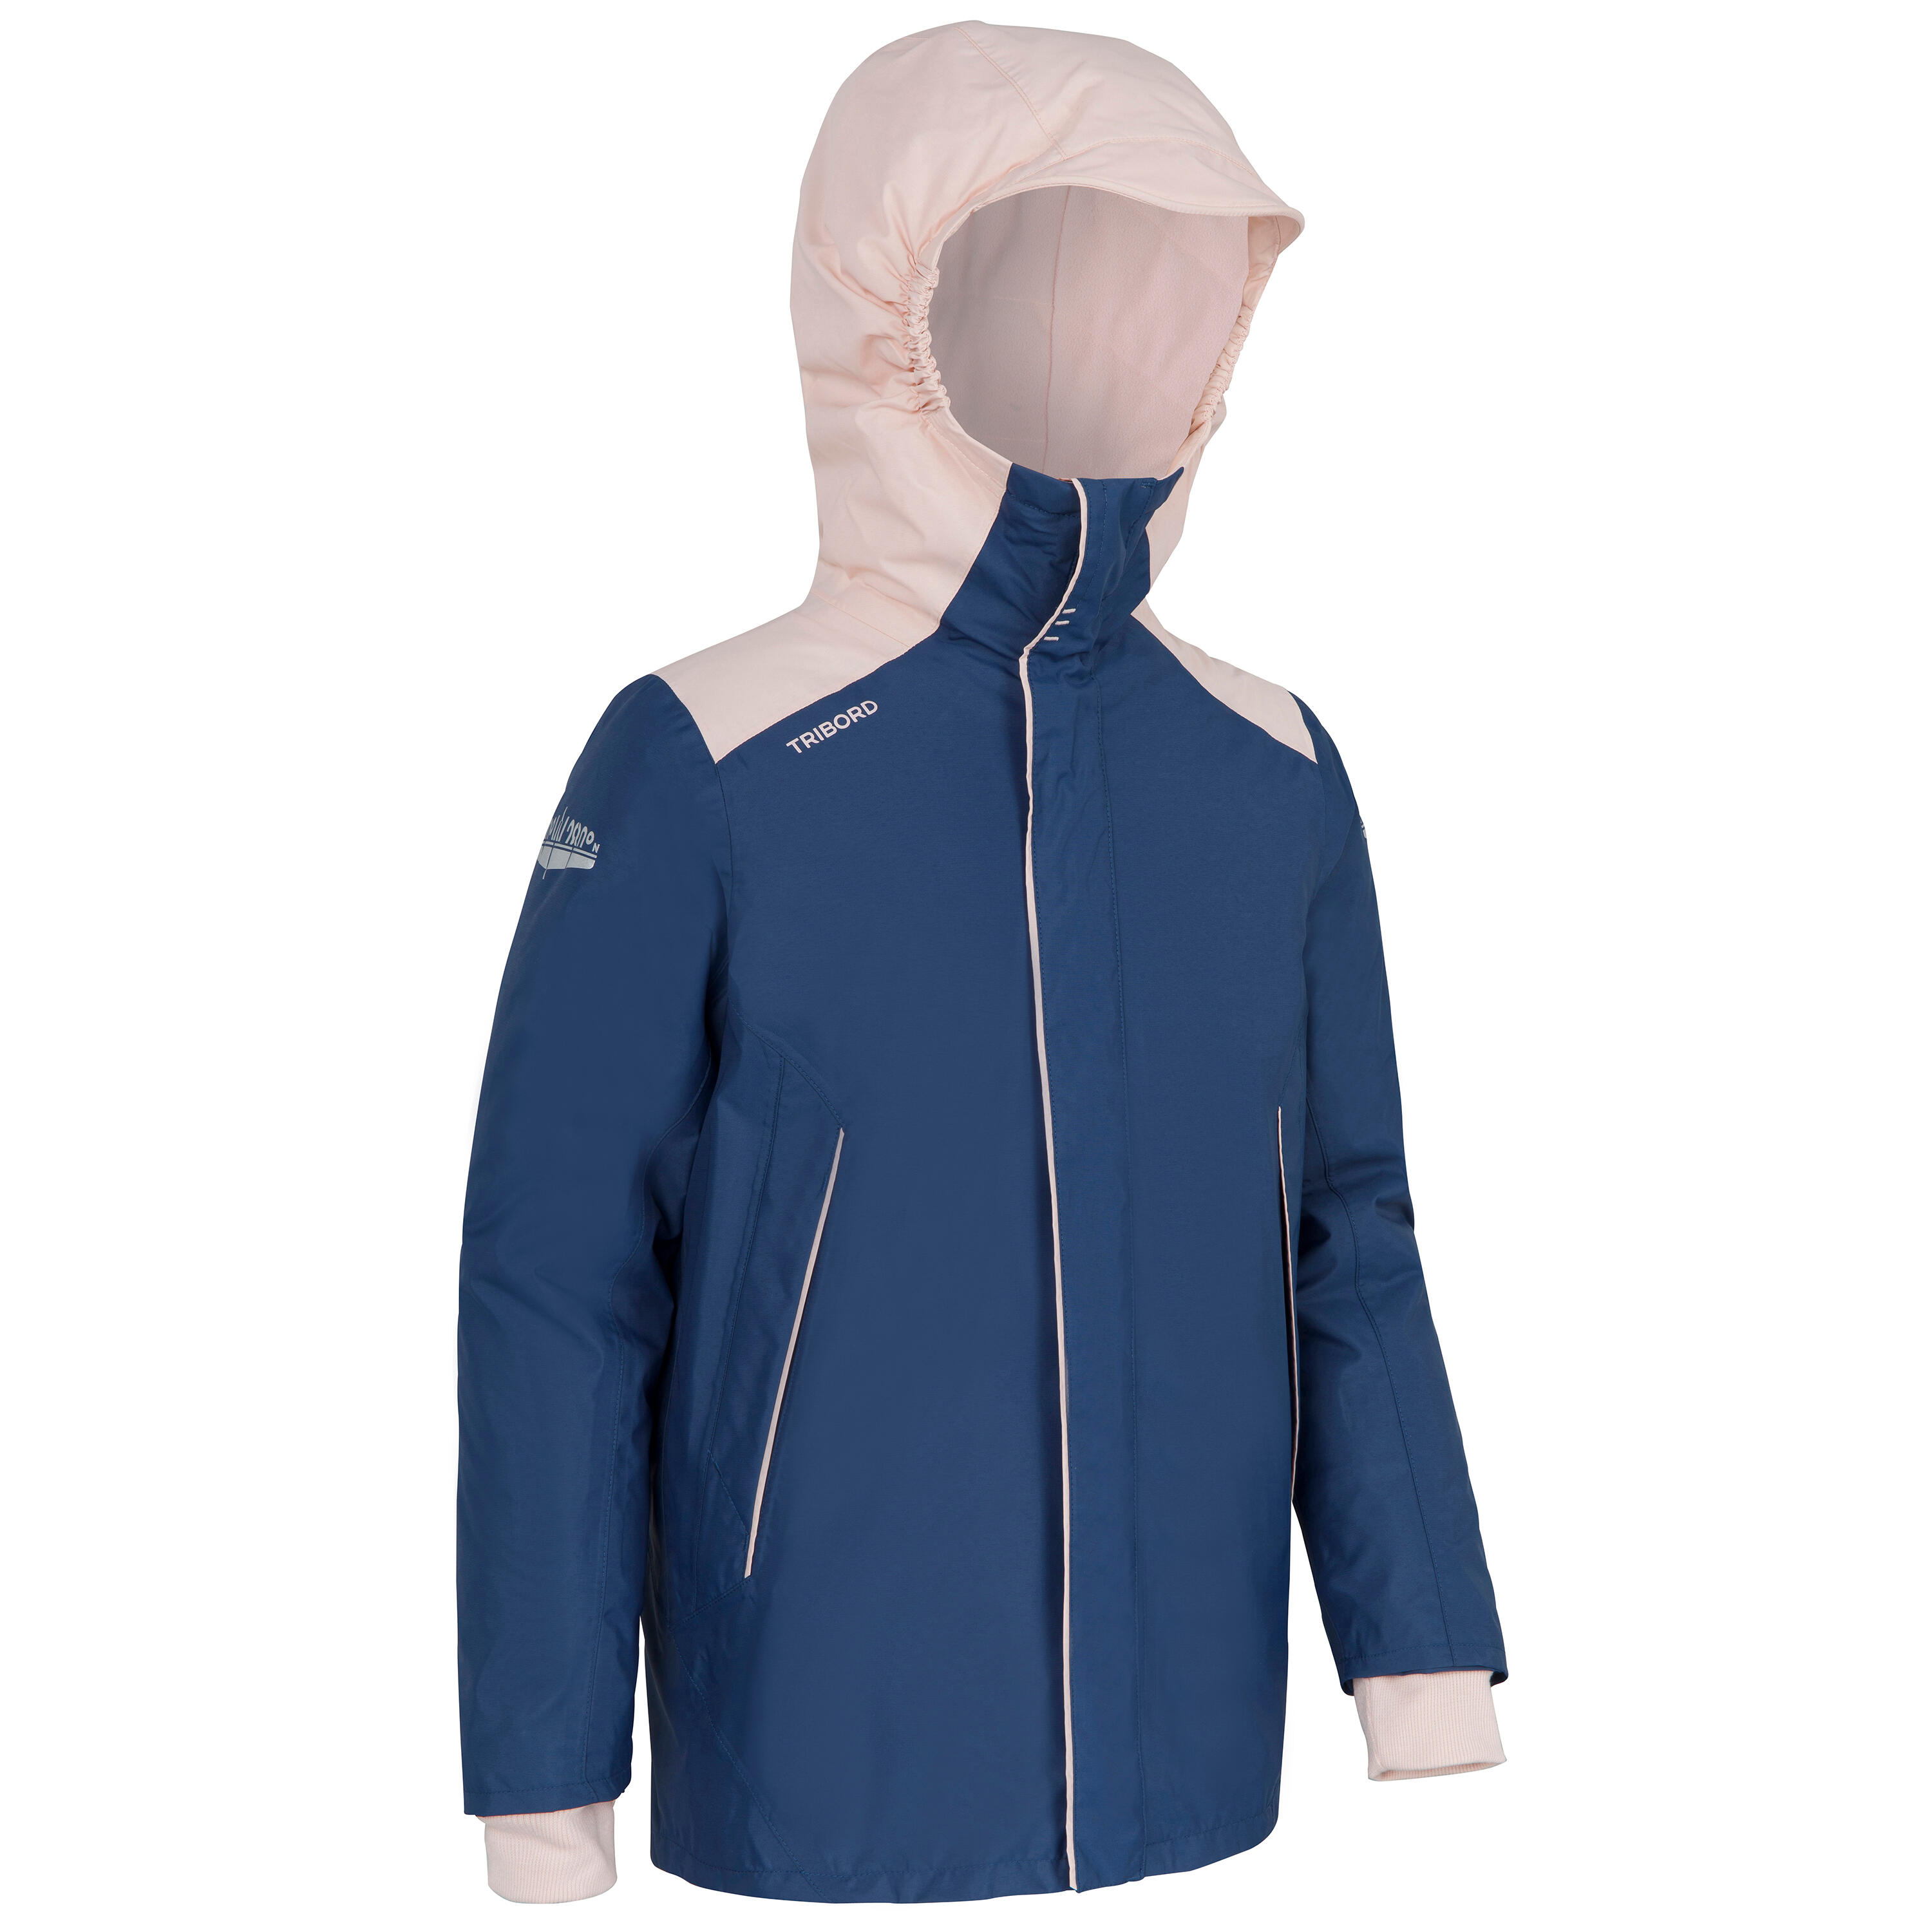 Kids sailing jacket warm and waterproof Sailing 100 blue pink 1/12